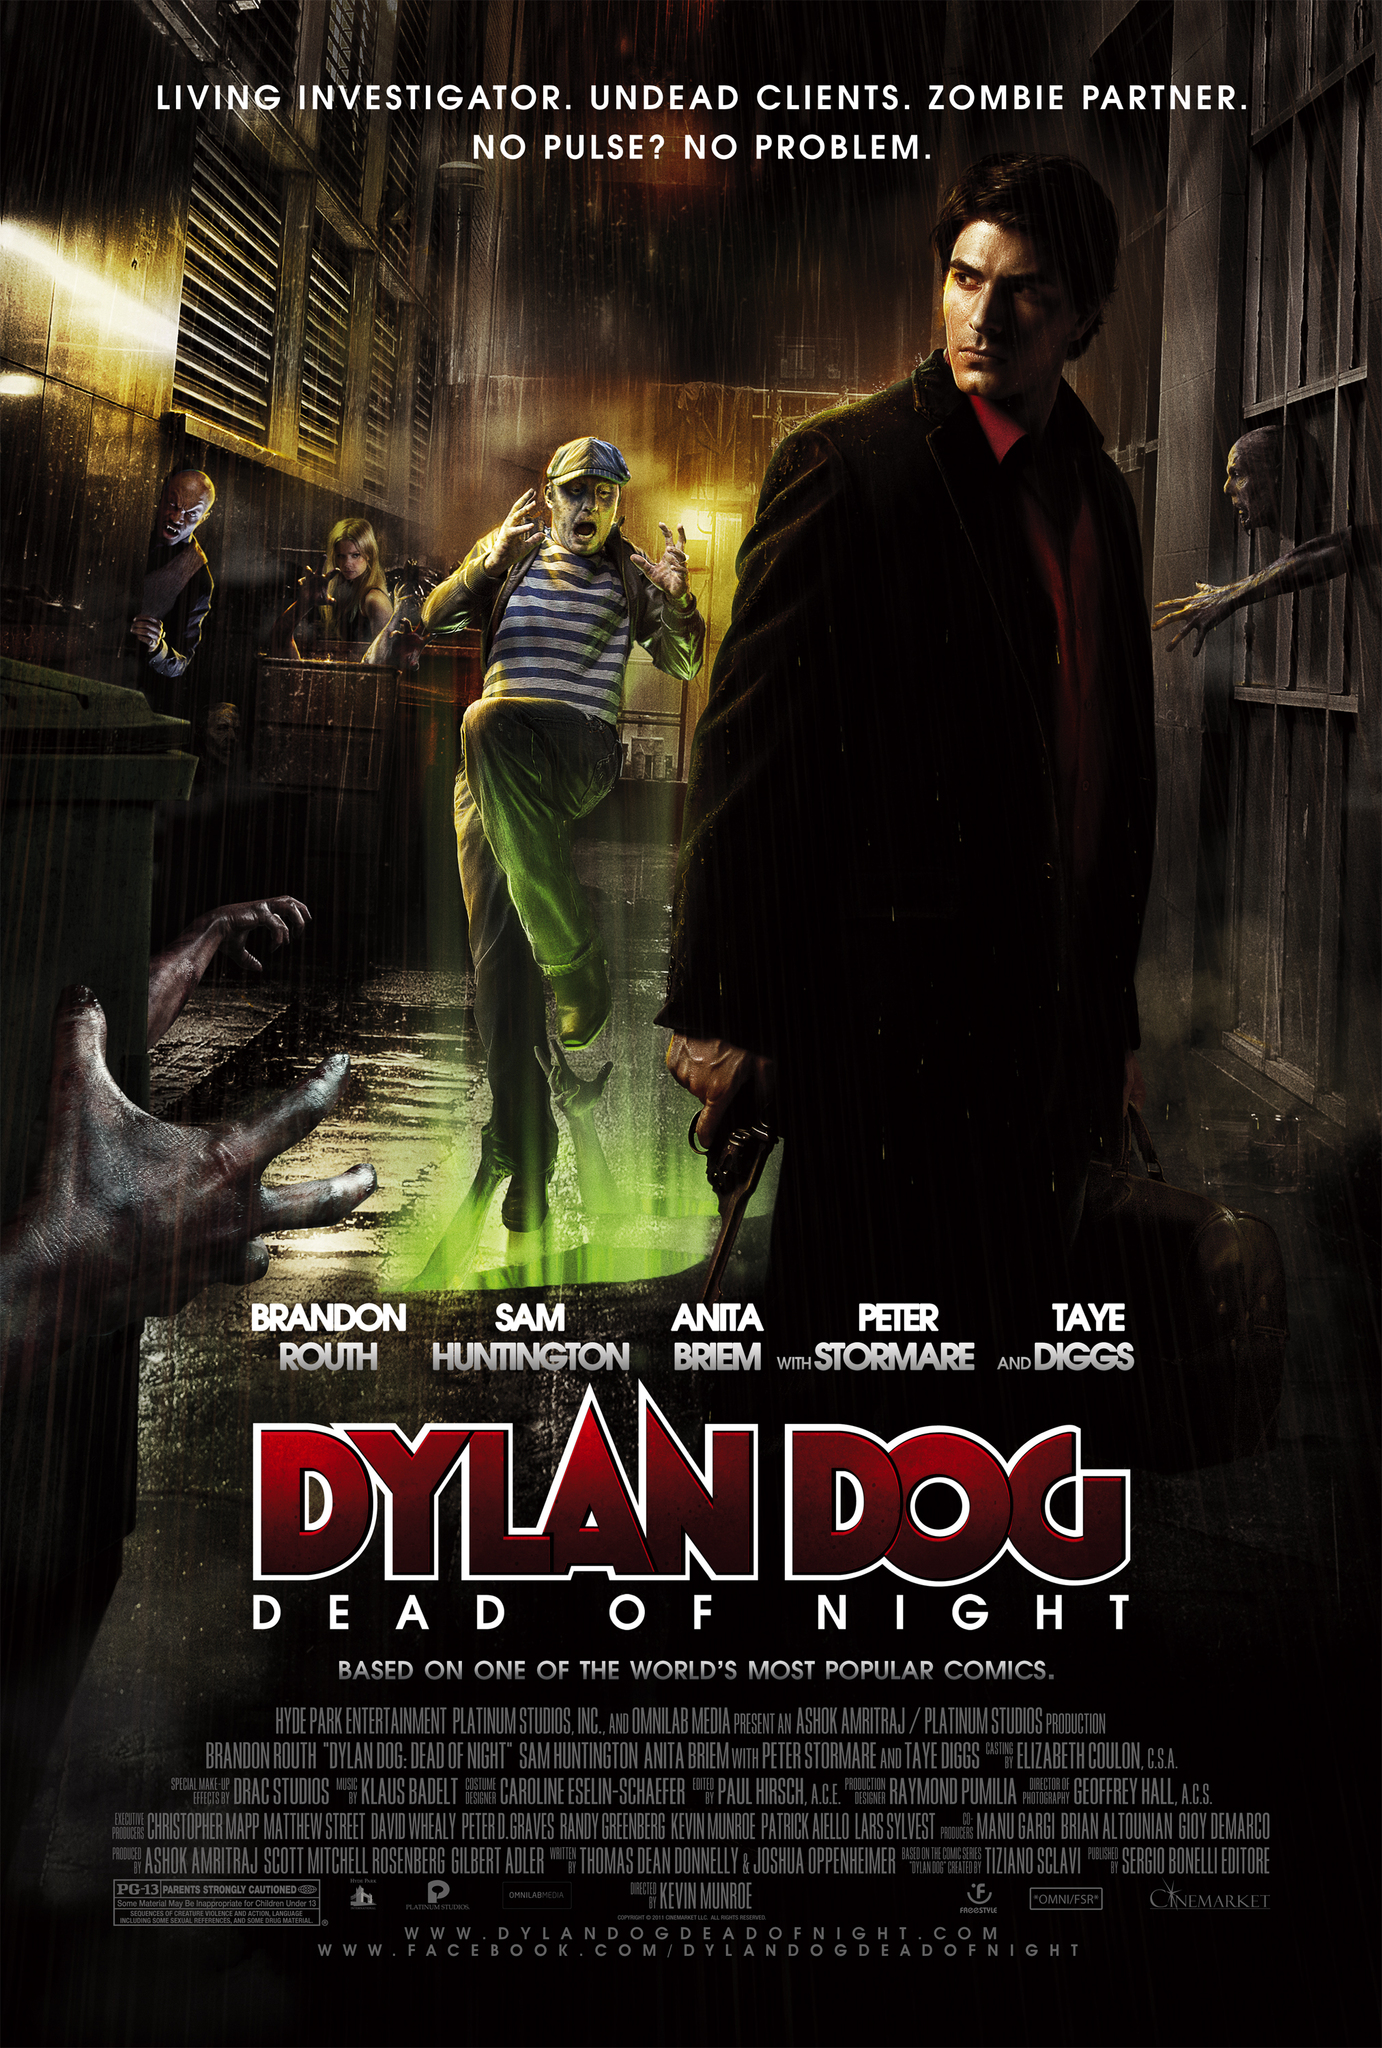 Dylon Dog Dead of Night (2010) ฮีโร่รัตติกาล ถล่มมารหมู่อสูร Brandon Routh